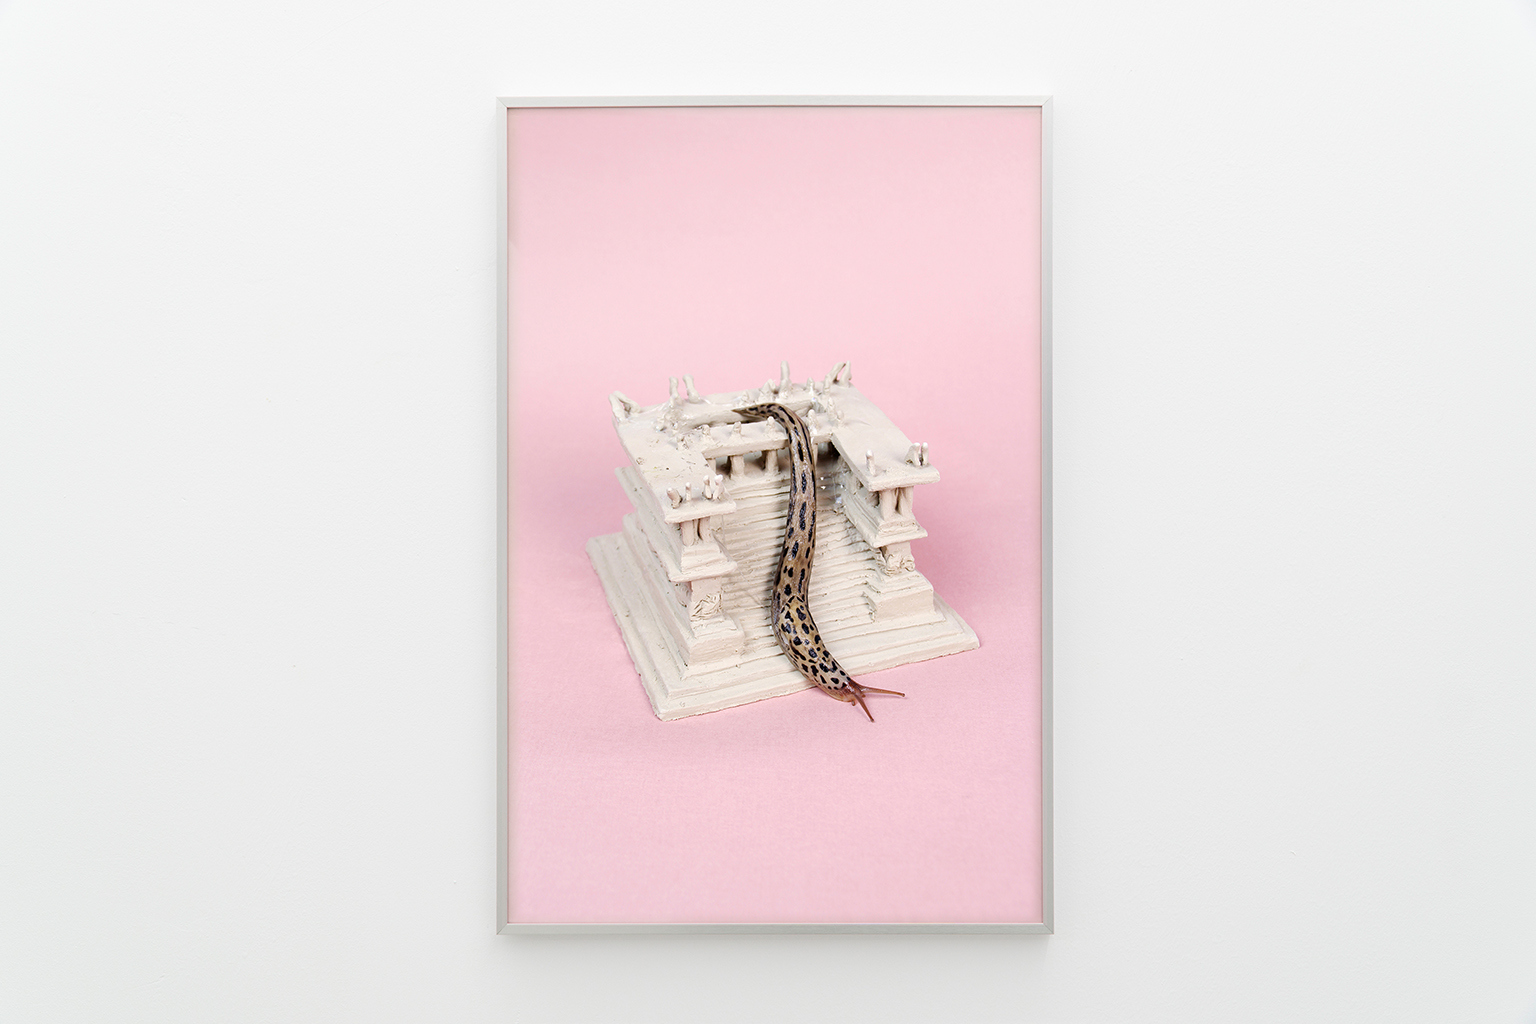 Lisa Marie Schmitt, Sleep Demon lV, C-Print, 2020